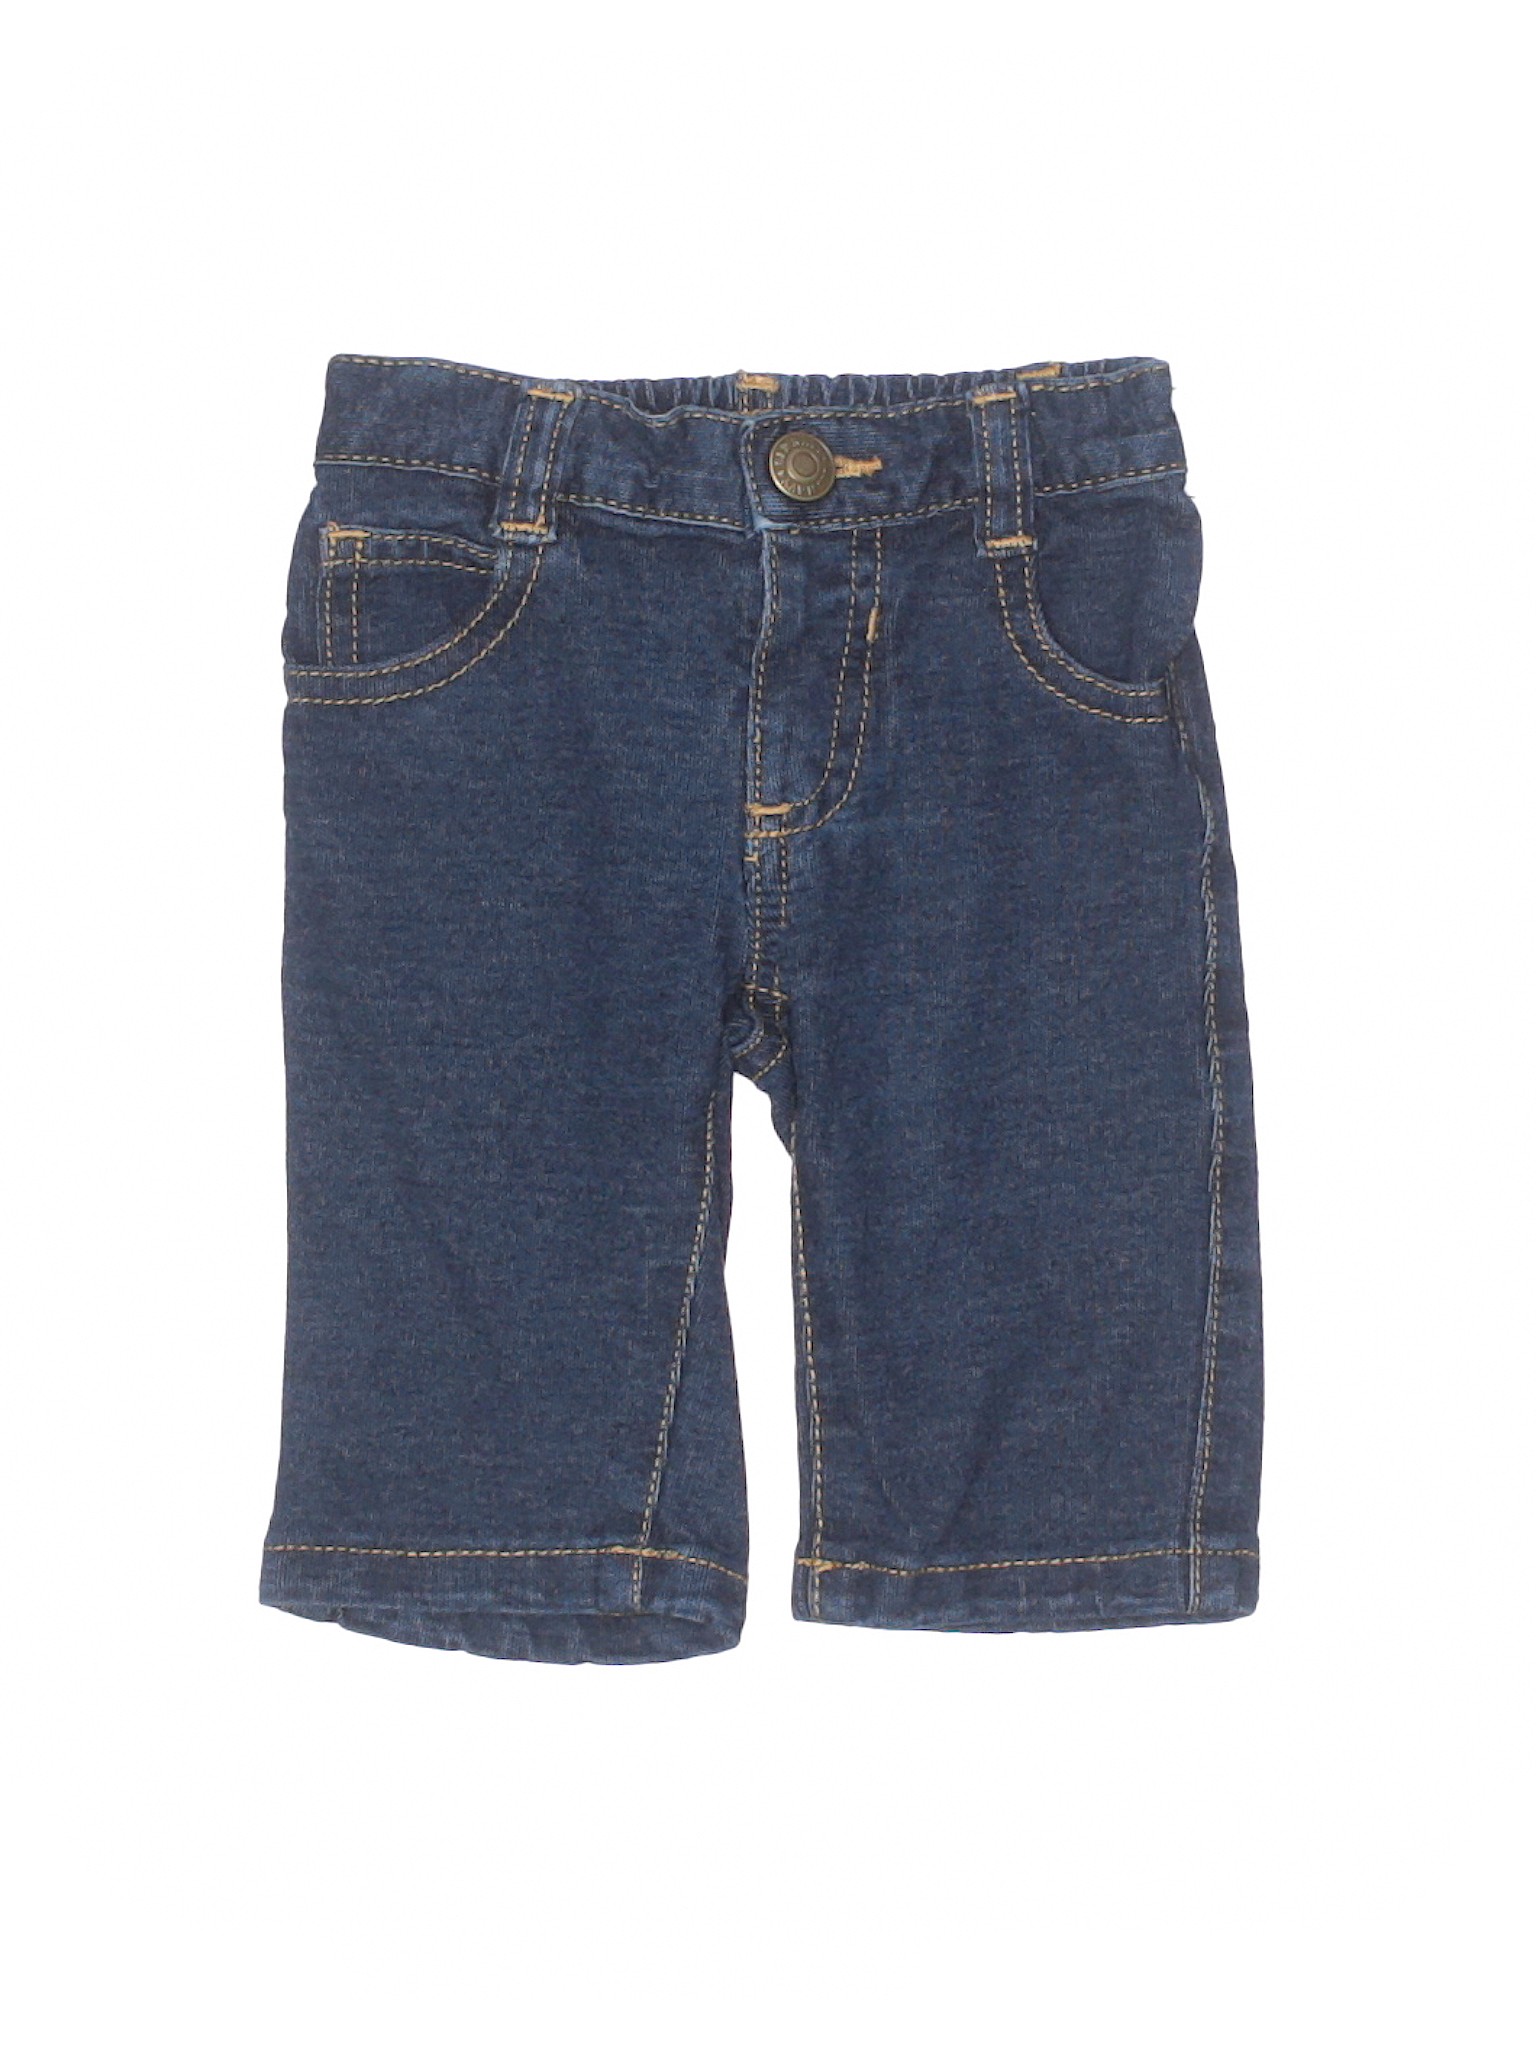 Old Navy Boys Blue Jeans 0-3 Months | eBay